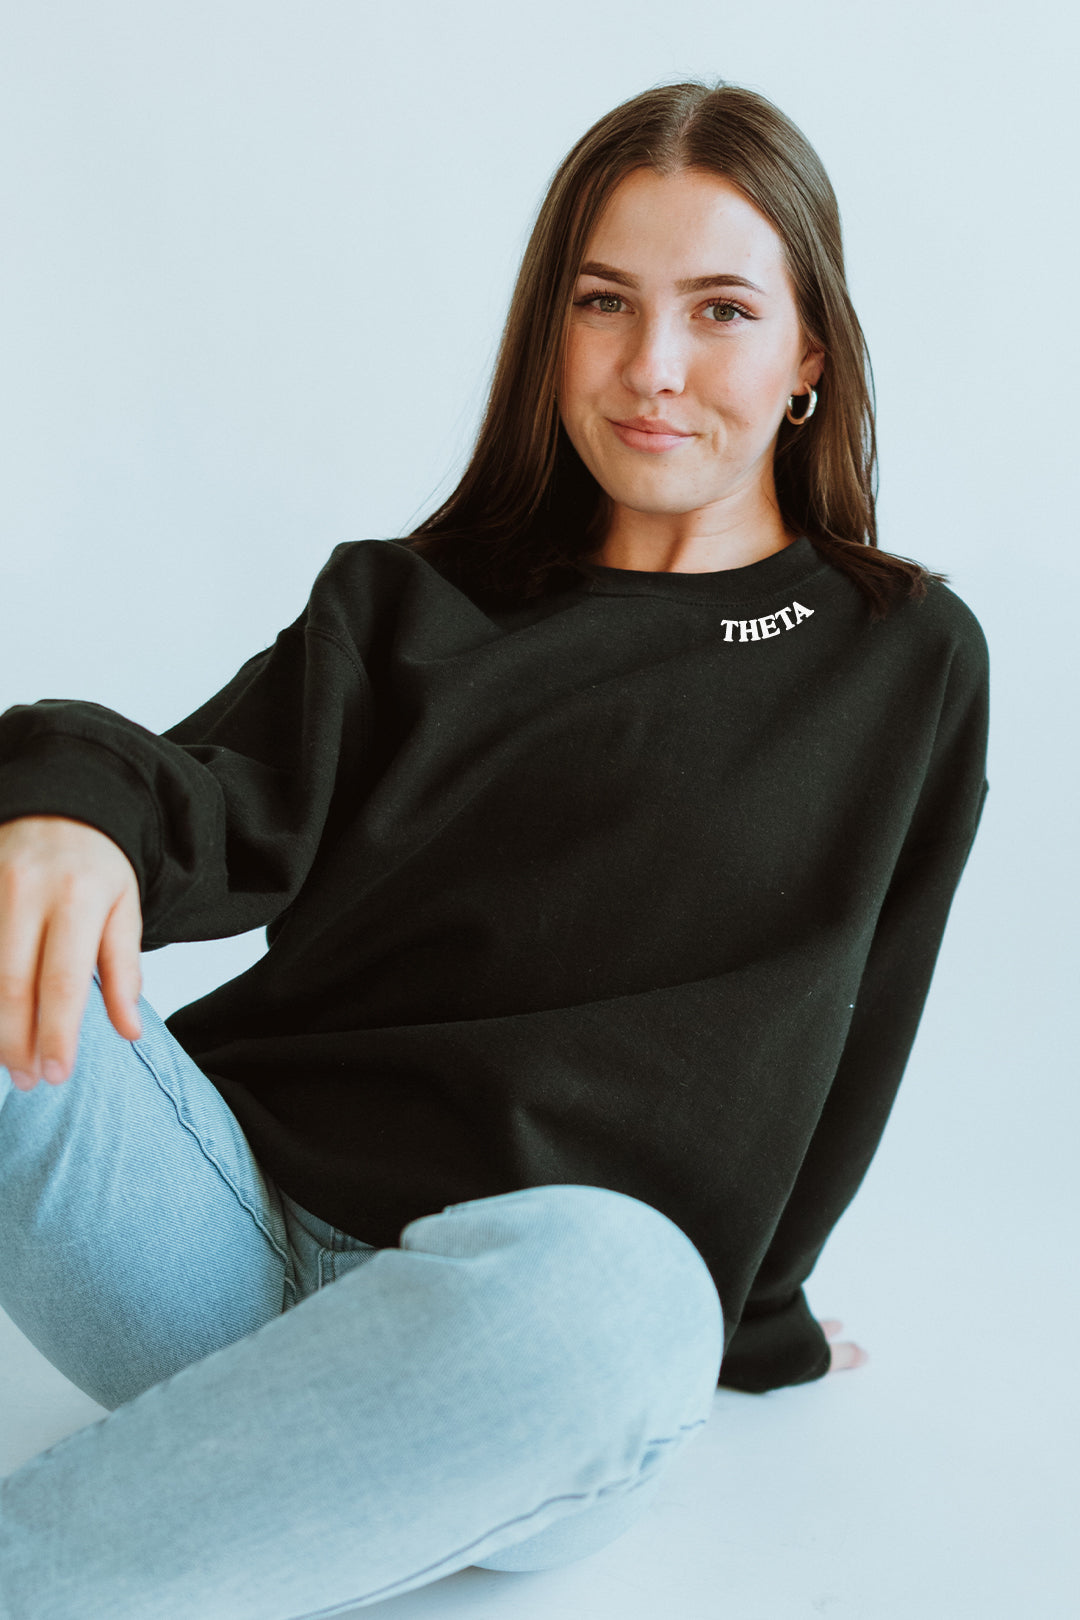 Black sweatshirt with White Collar text - Theta